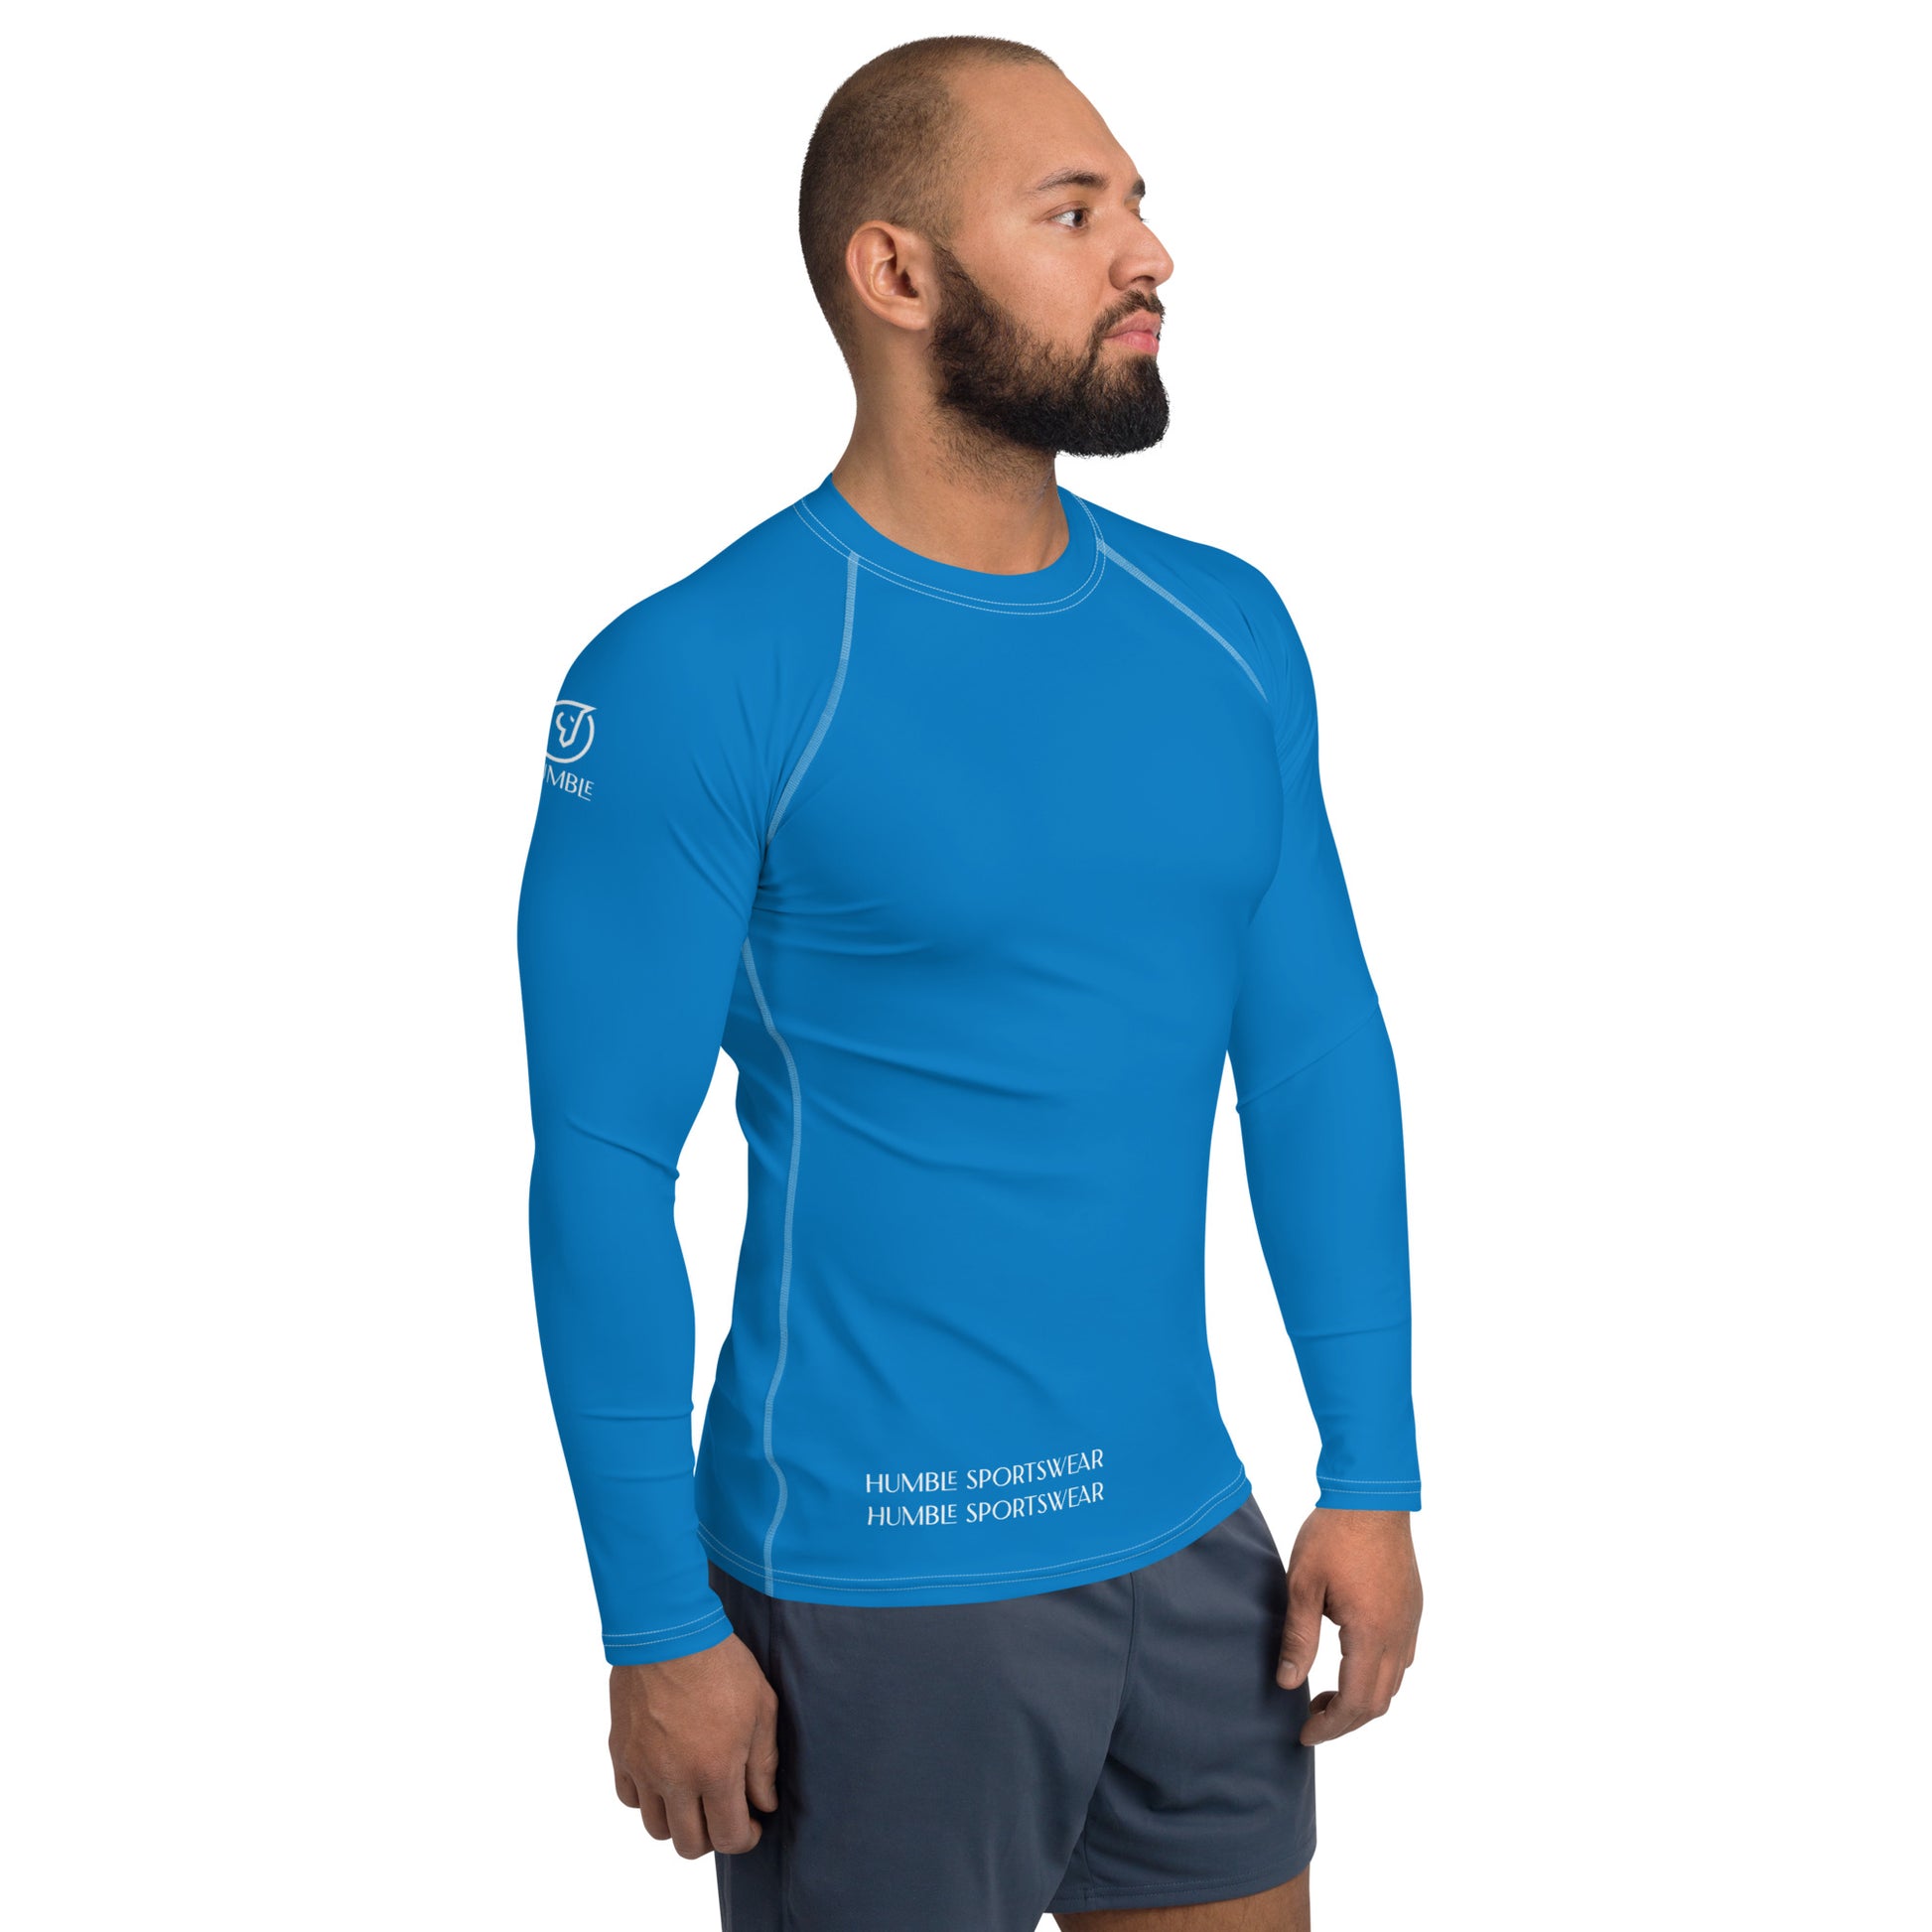 Humble sportswear, men's lazer blue long sleeve compression rash guard, long sleeve tops for gym